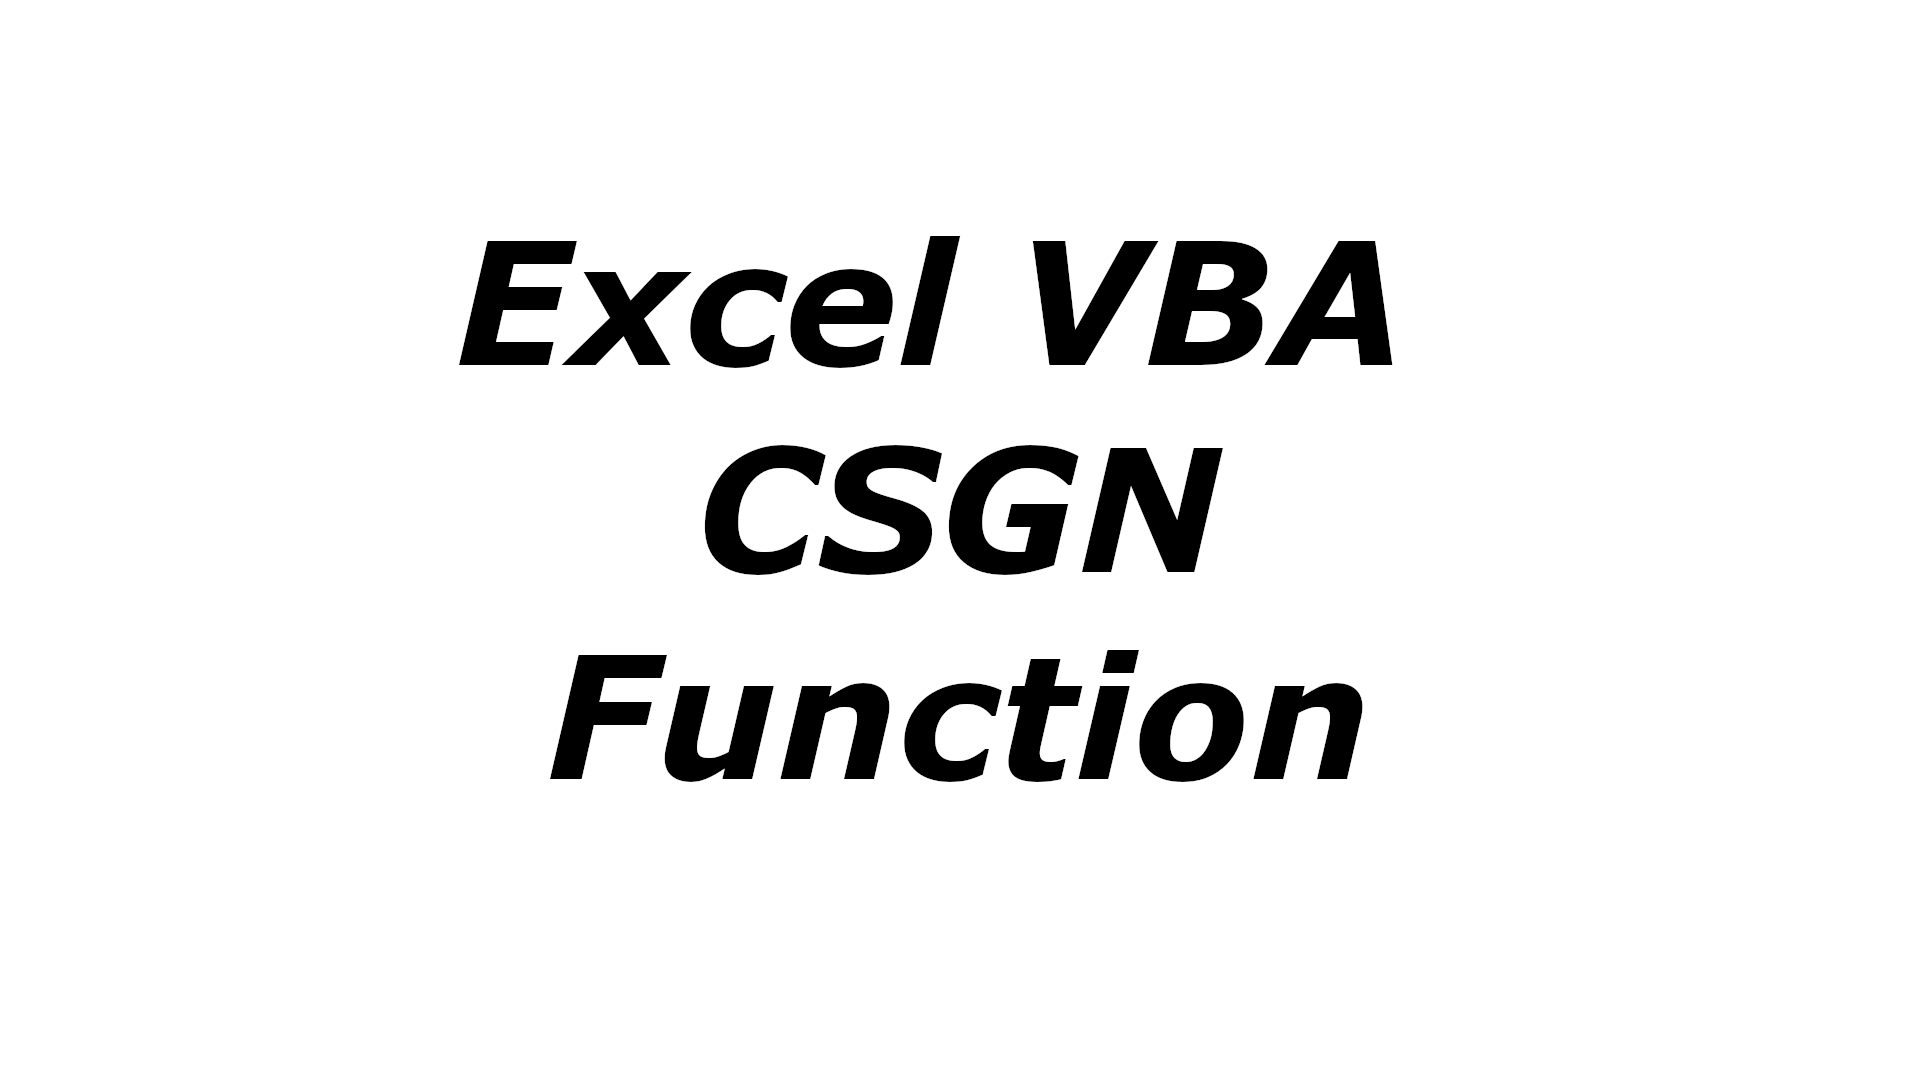 Excel VBA CSGN function